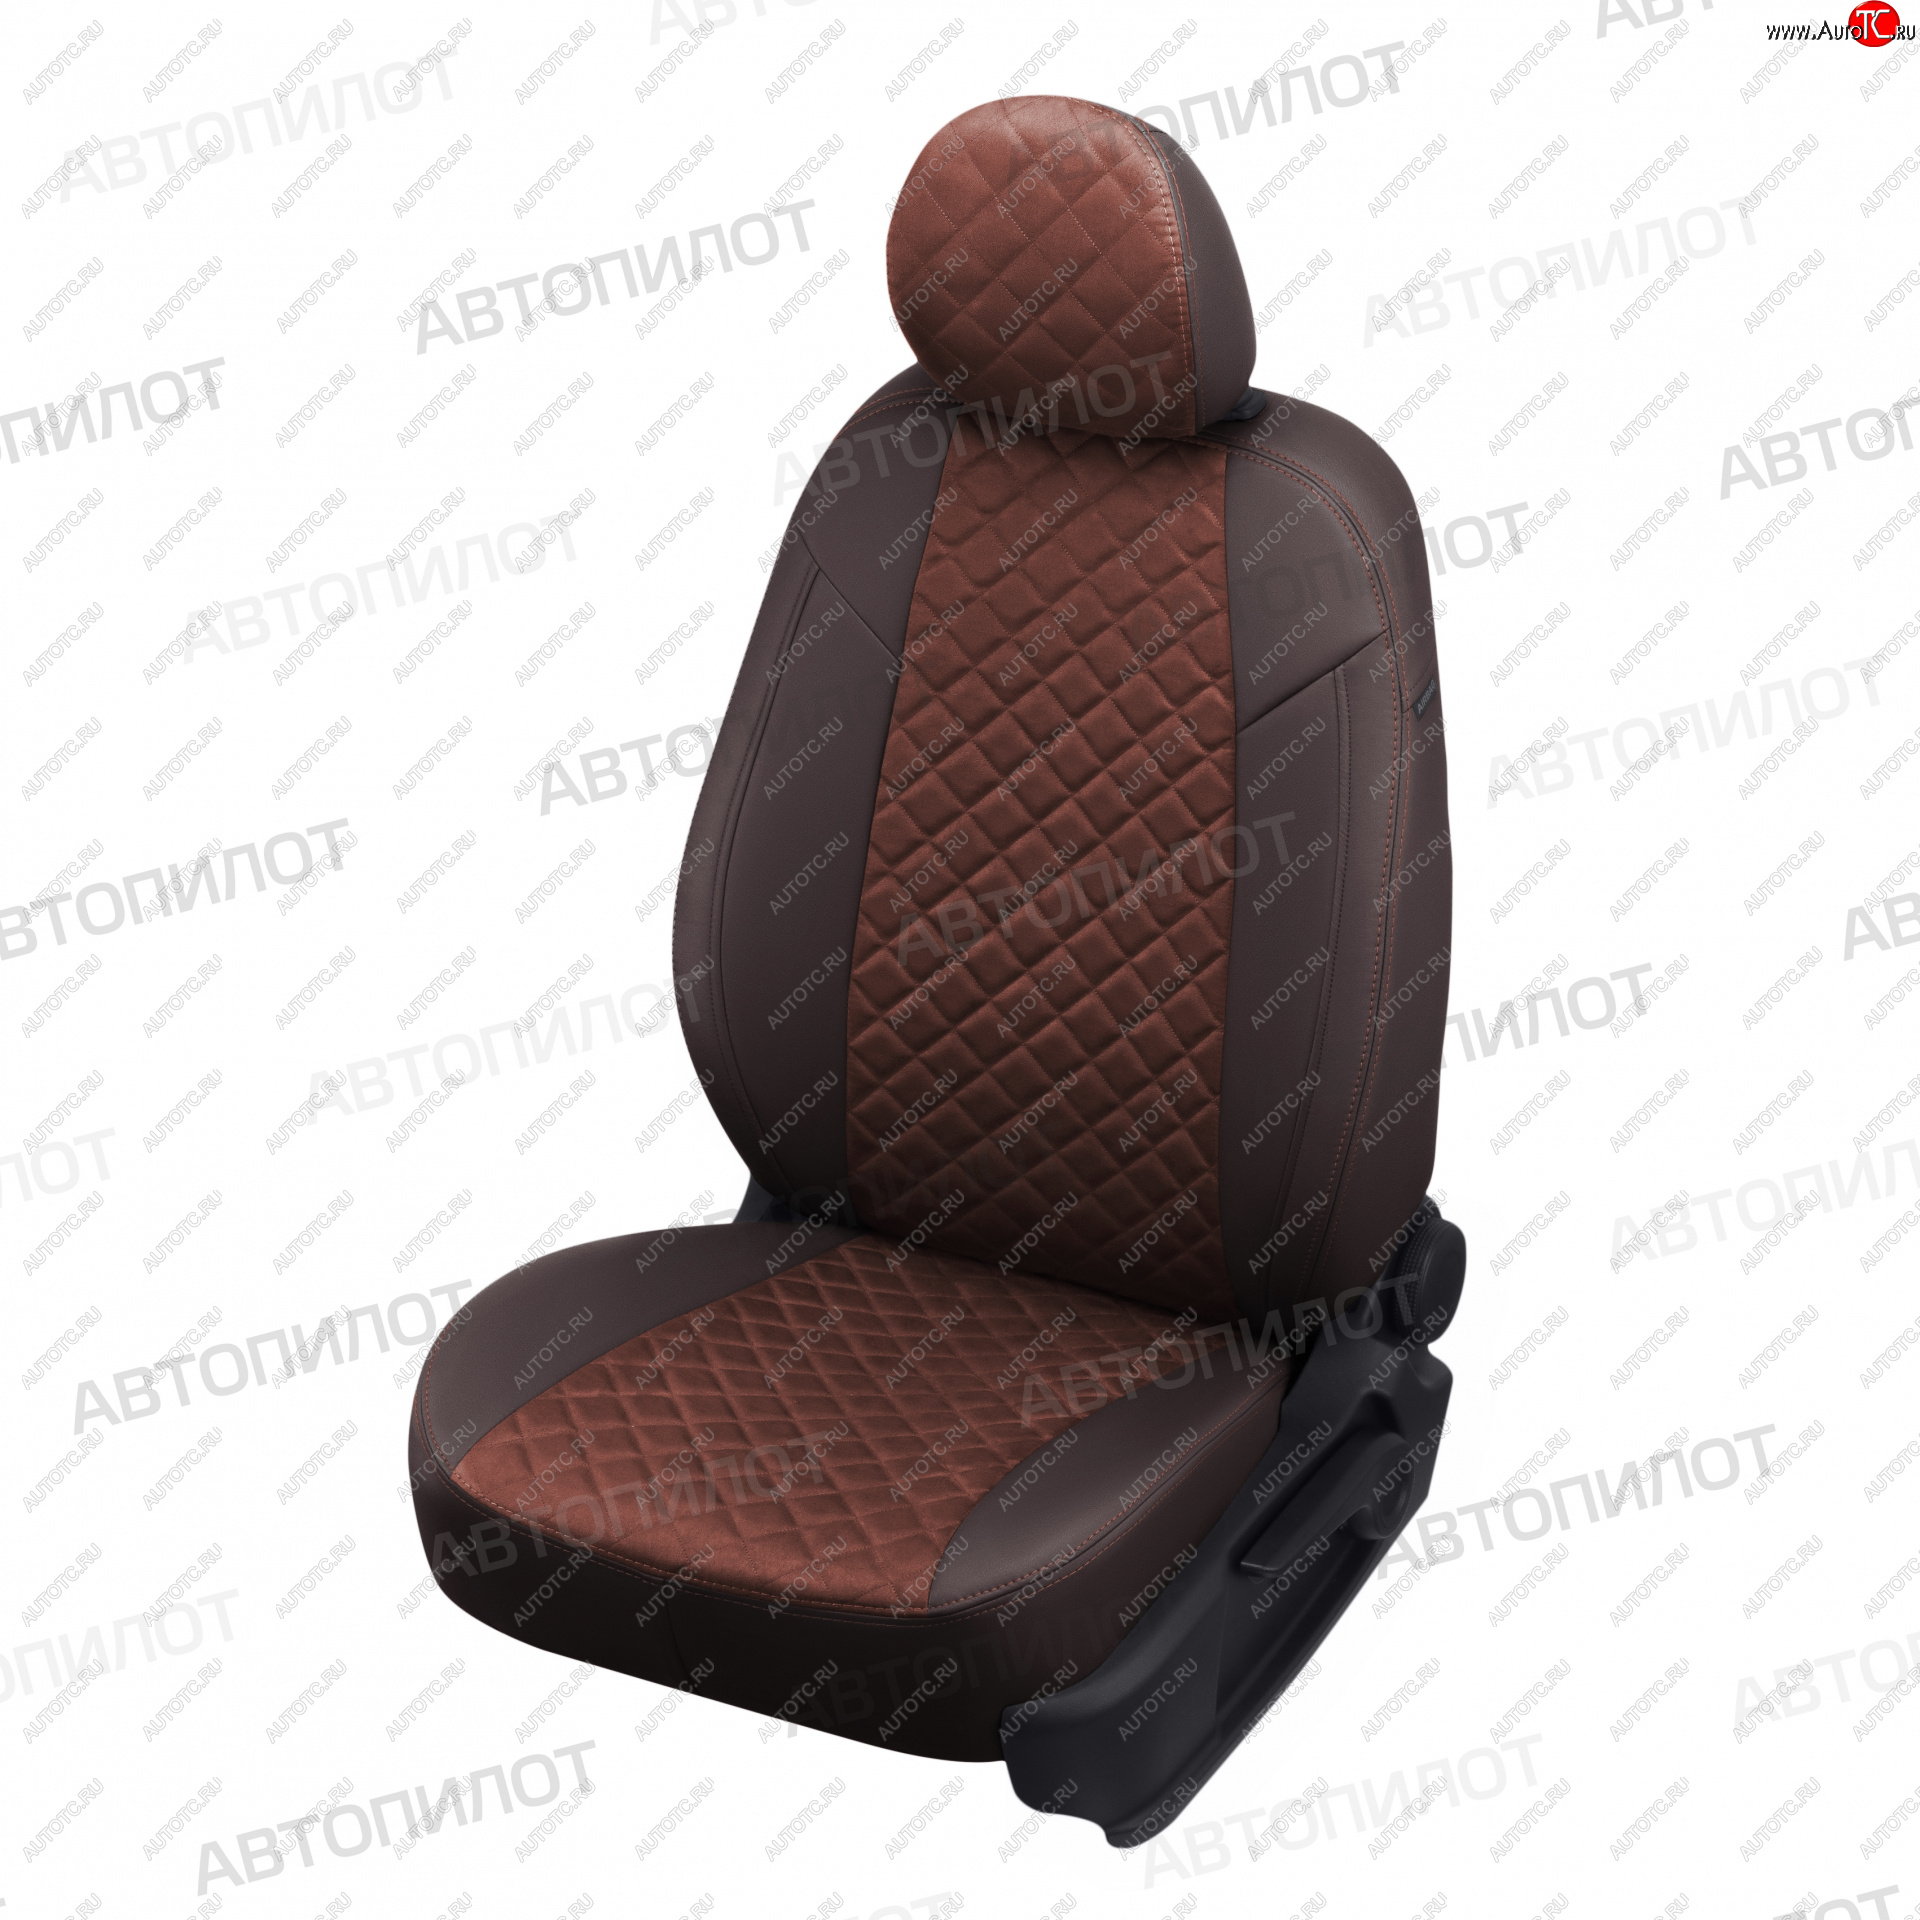 13 999 р. Чехлы сидений (экокожа/алькантара, 40/60) Автопилот Ромб  Ford Escape  2 (2008-2012) (шоколад)